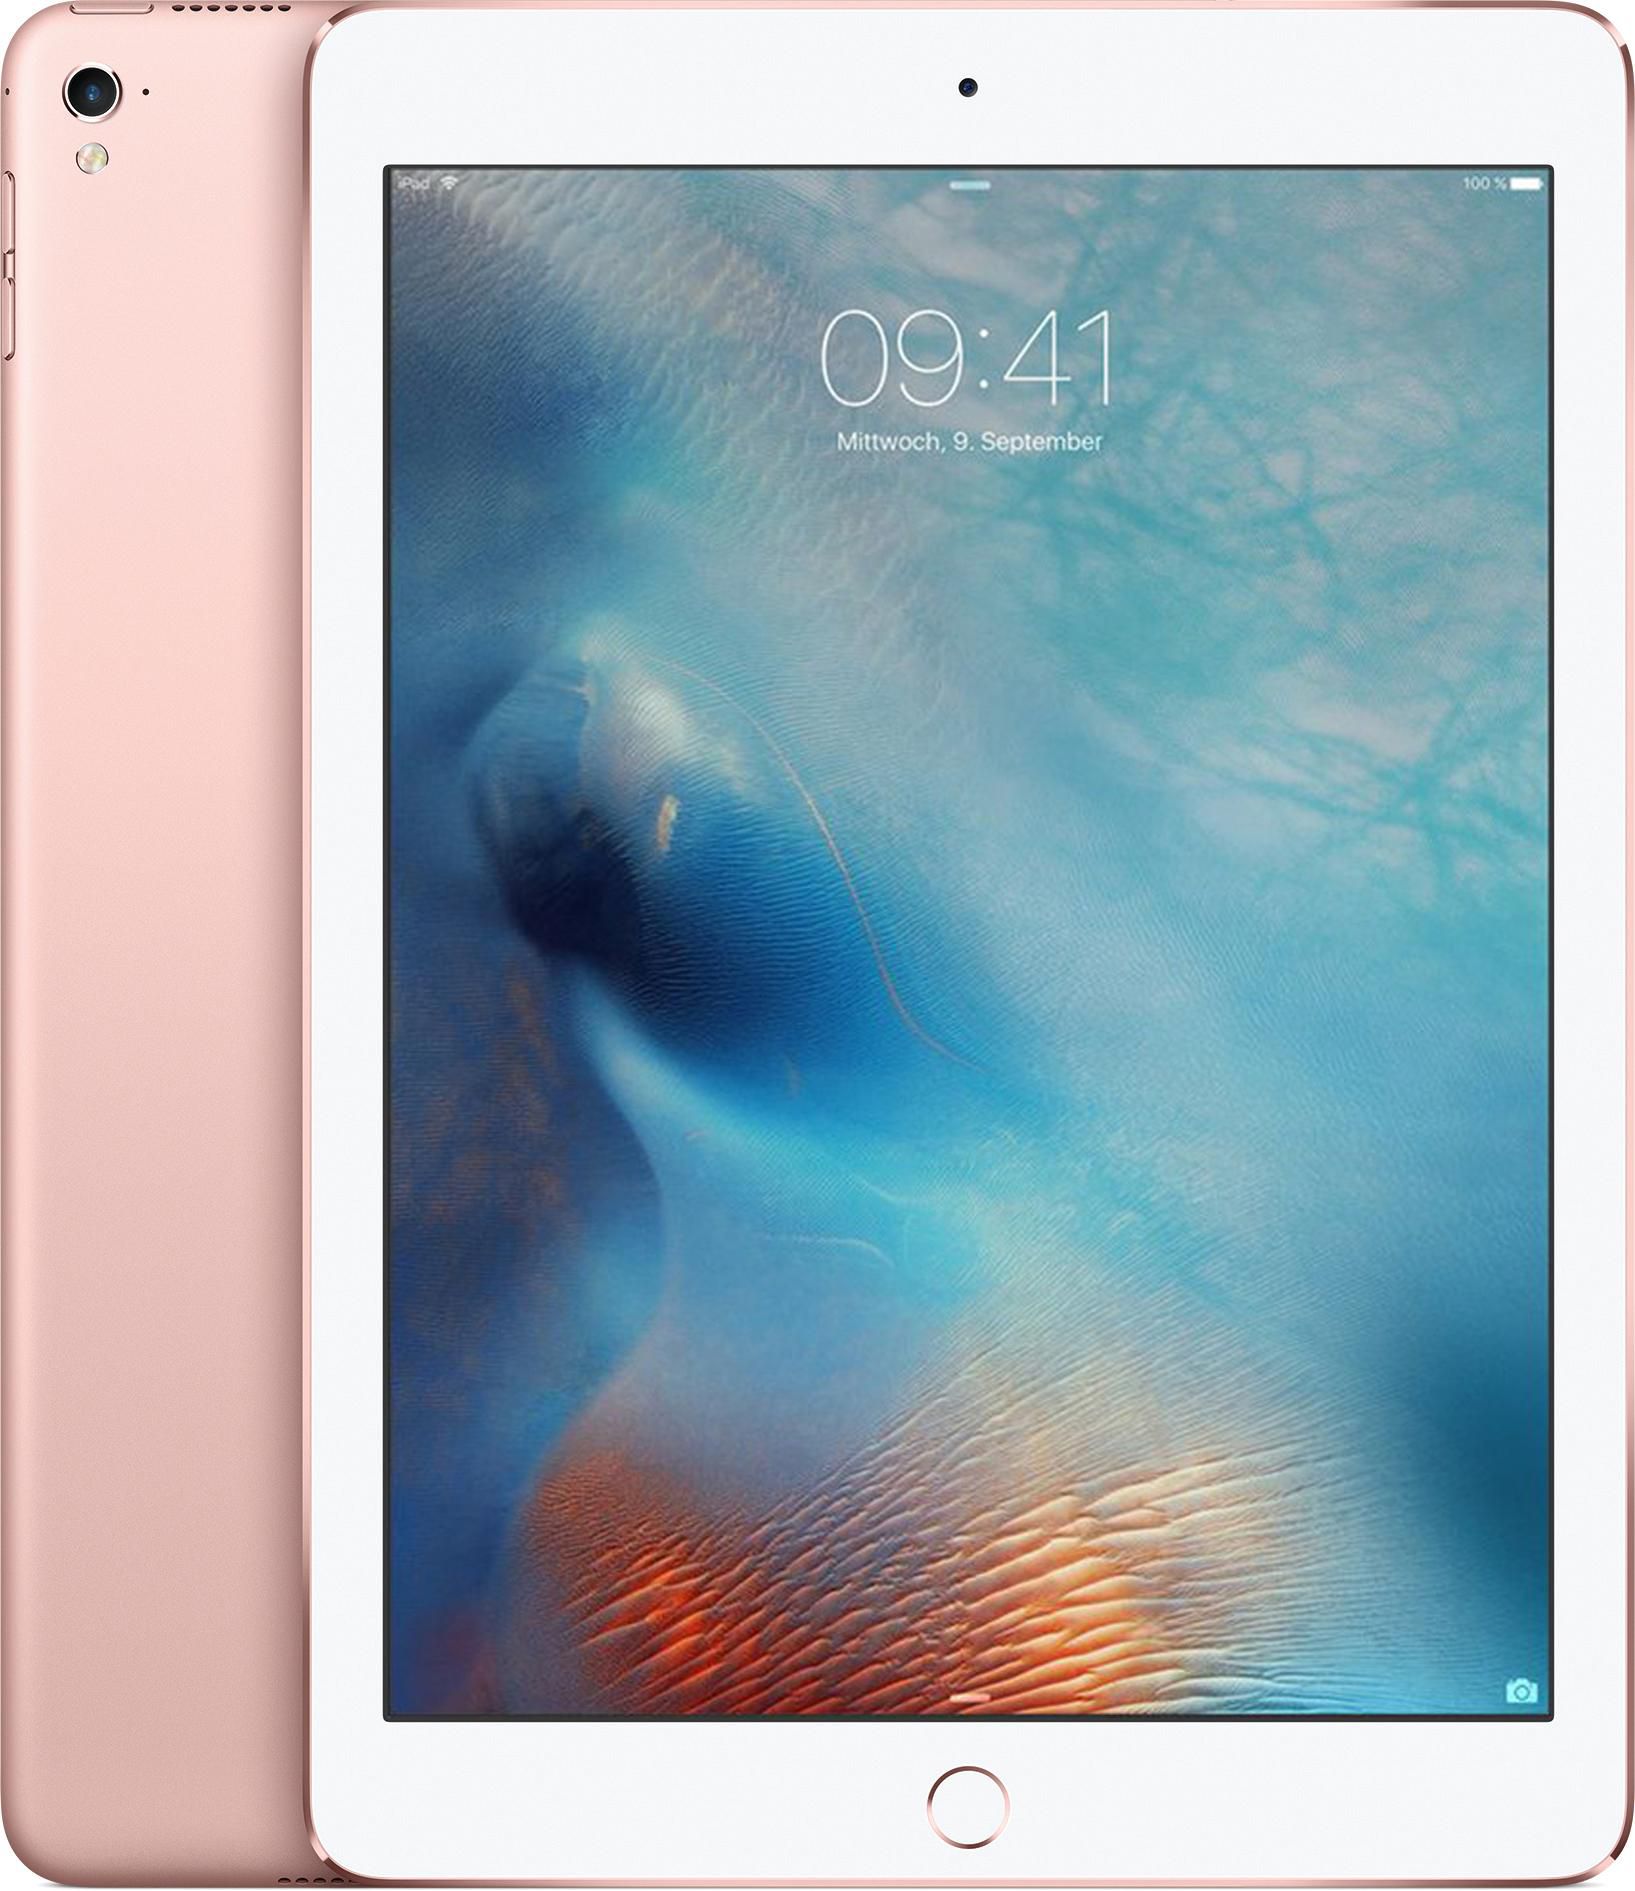 Apple iPad Pro 9.7, WiFi Tablet PC, 9.7", 32 GB (NAND Flash), Rose Gold